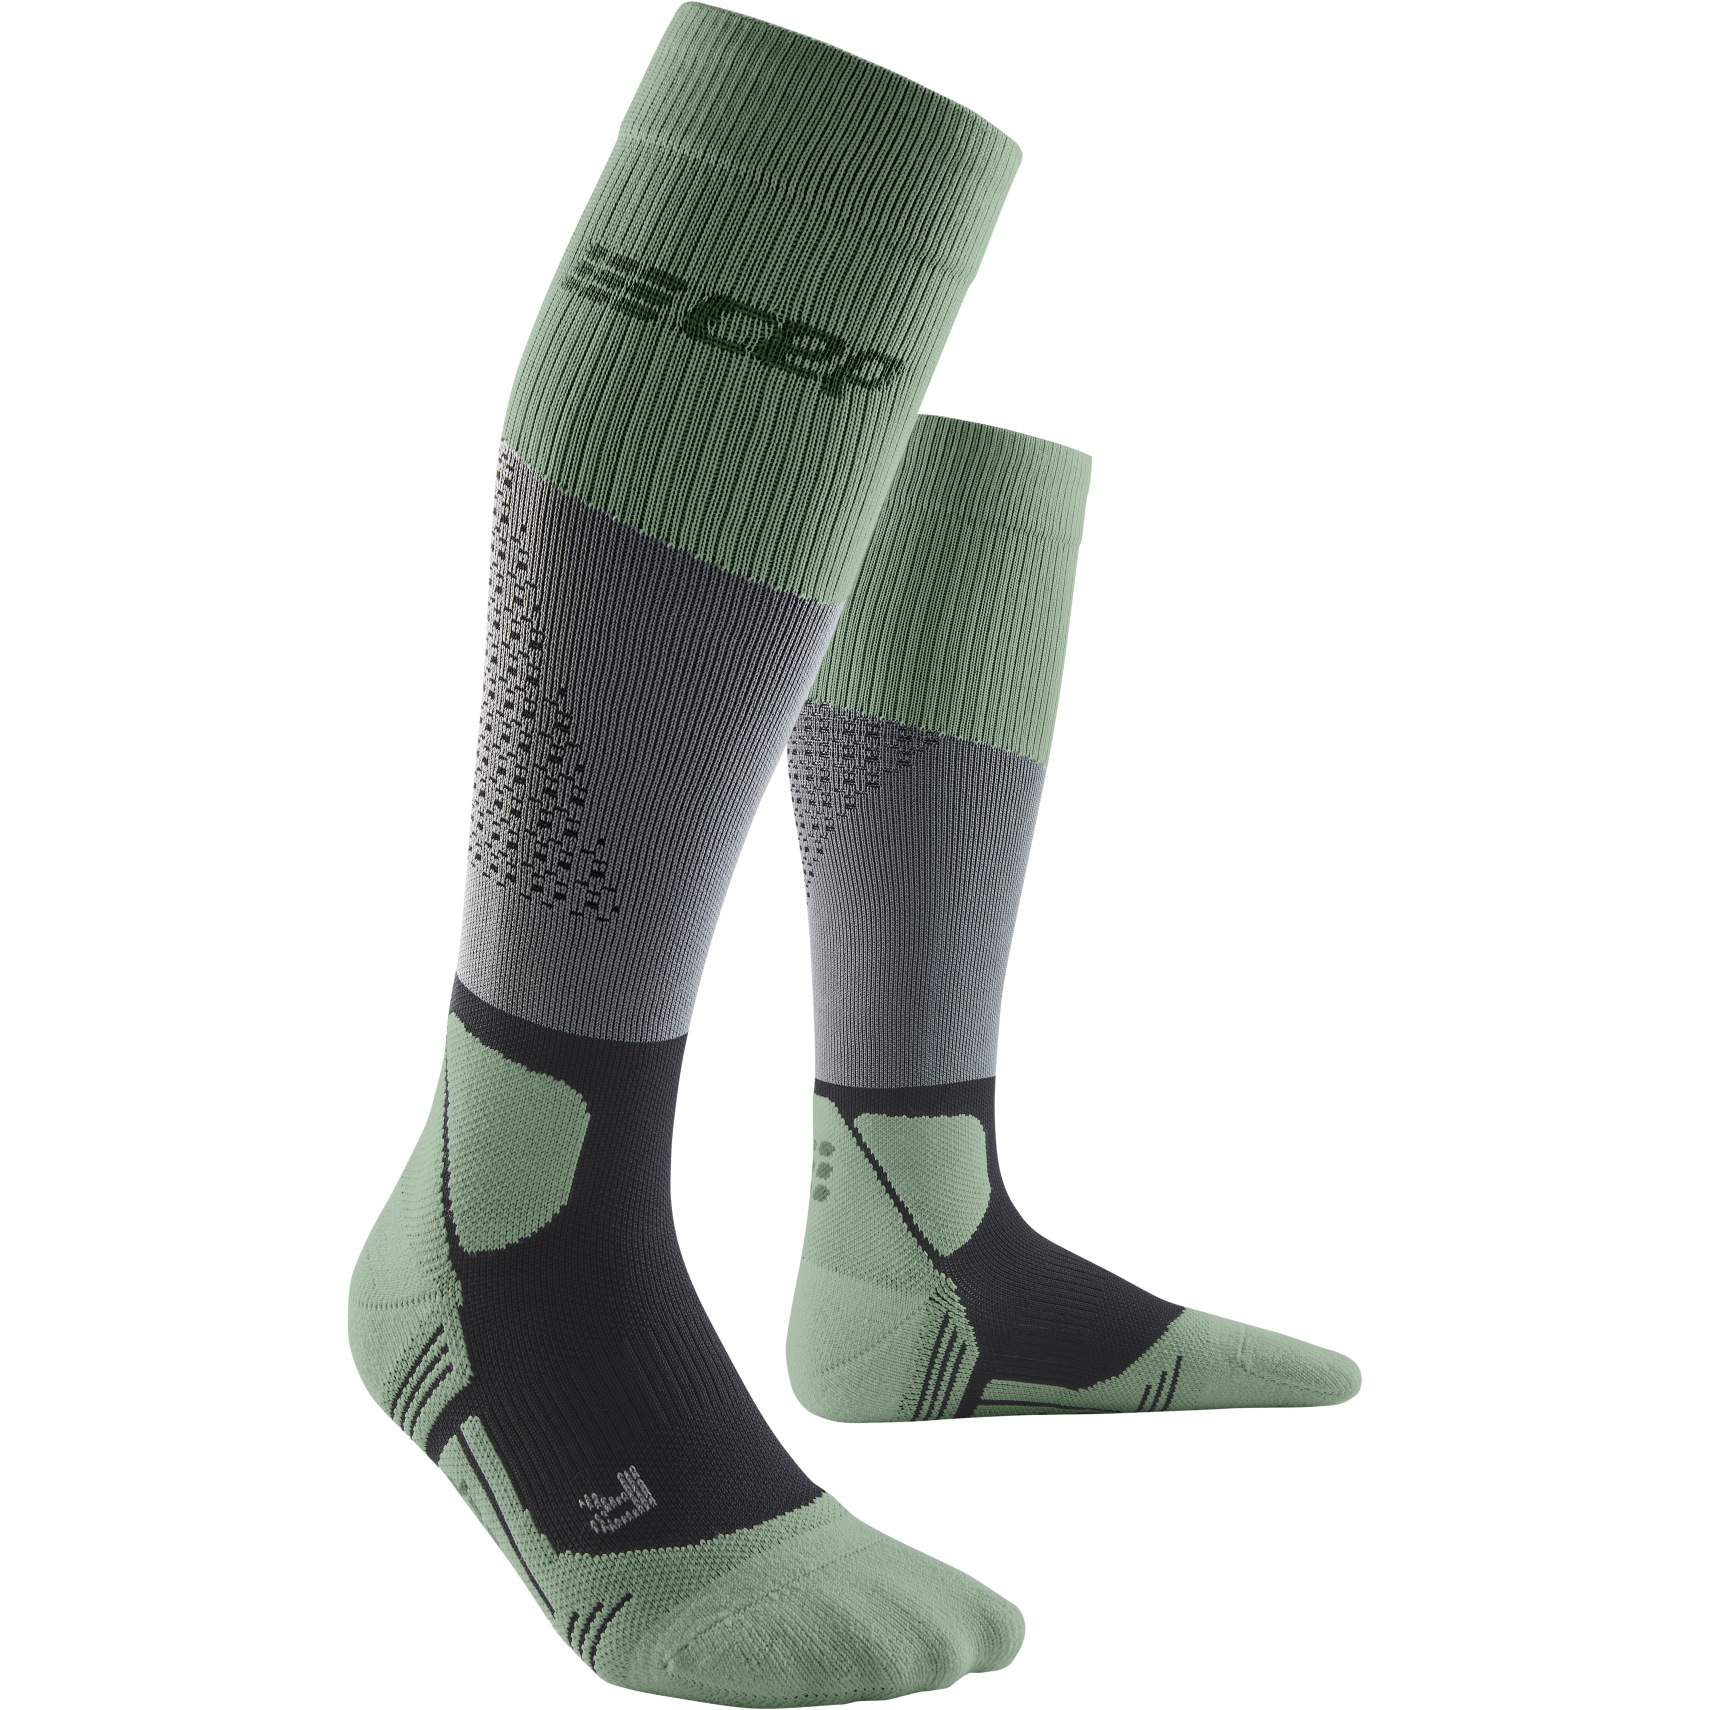 Image of CEP Max Cushion Hiking Tall Compression Socks Women - grey/mint